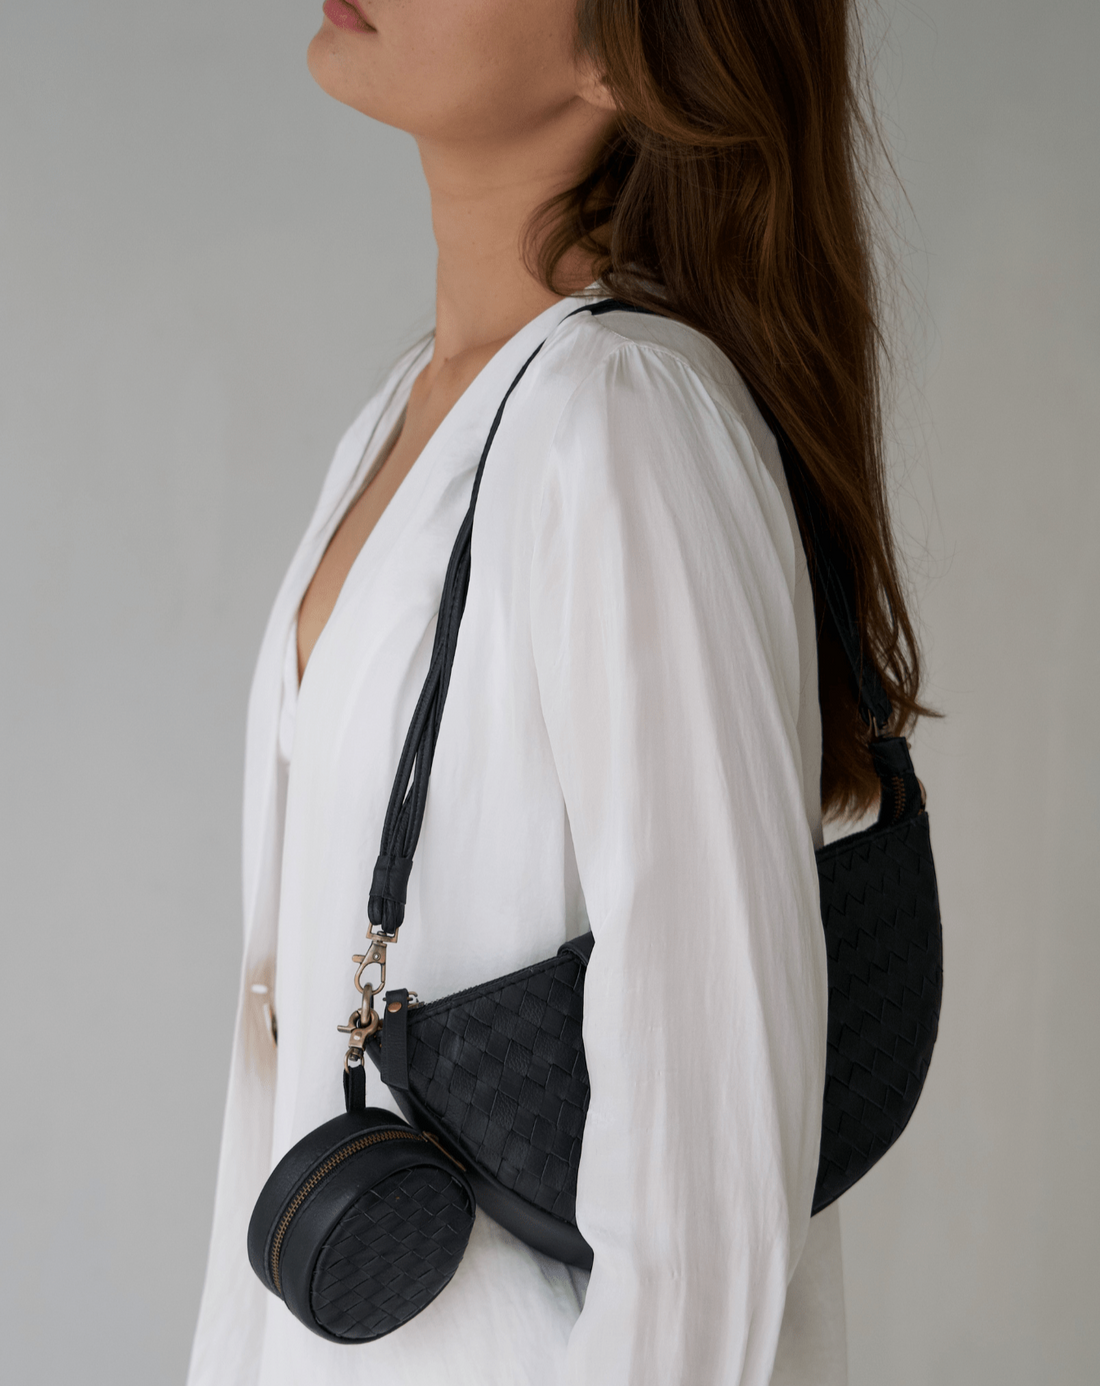 Mandrn Naomi Woven - Black Bag